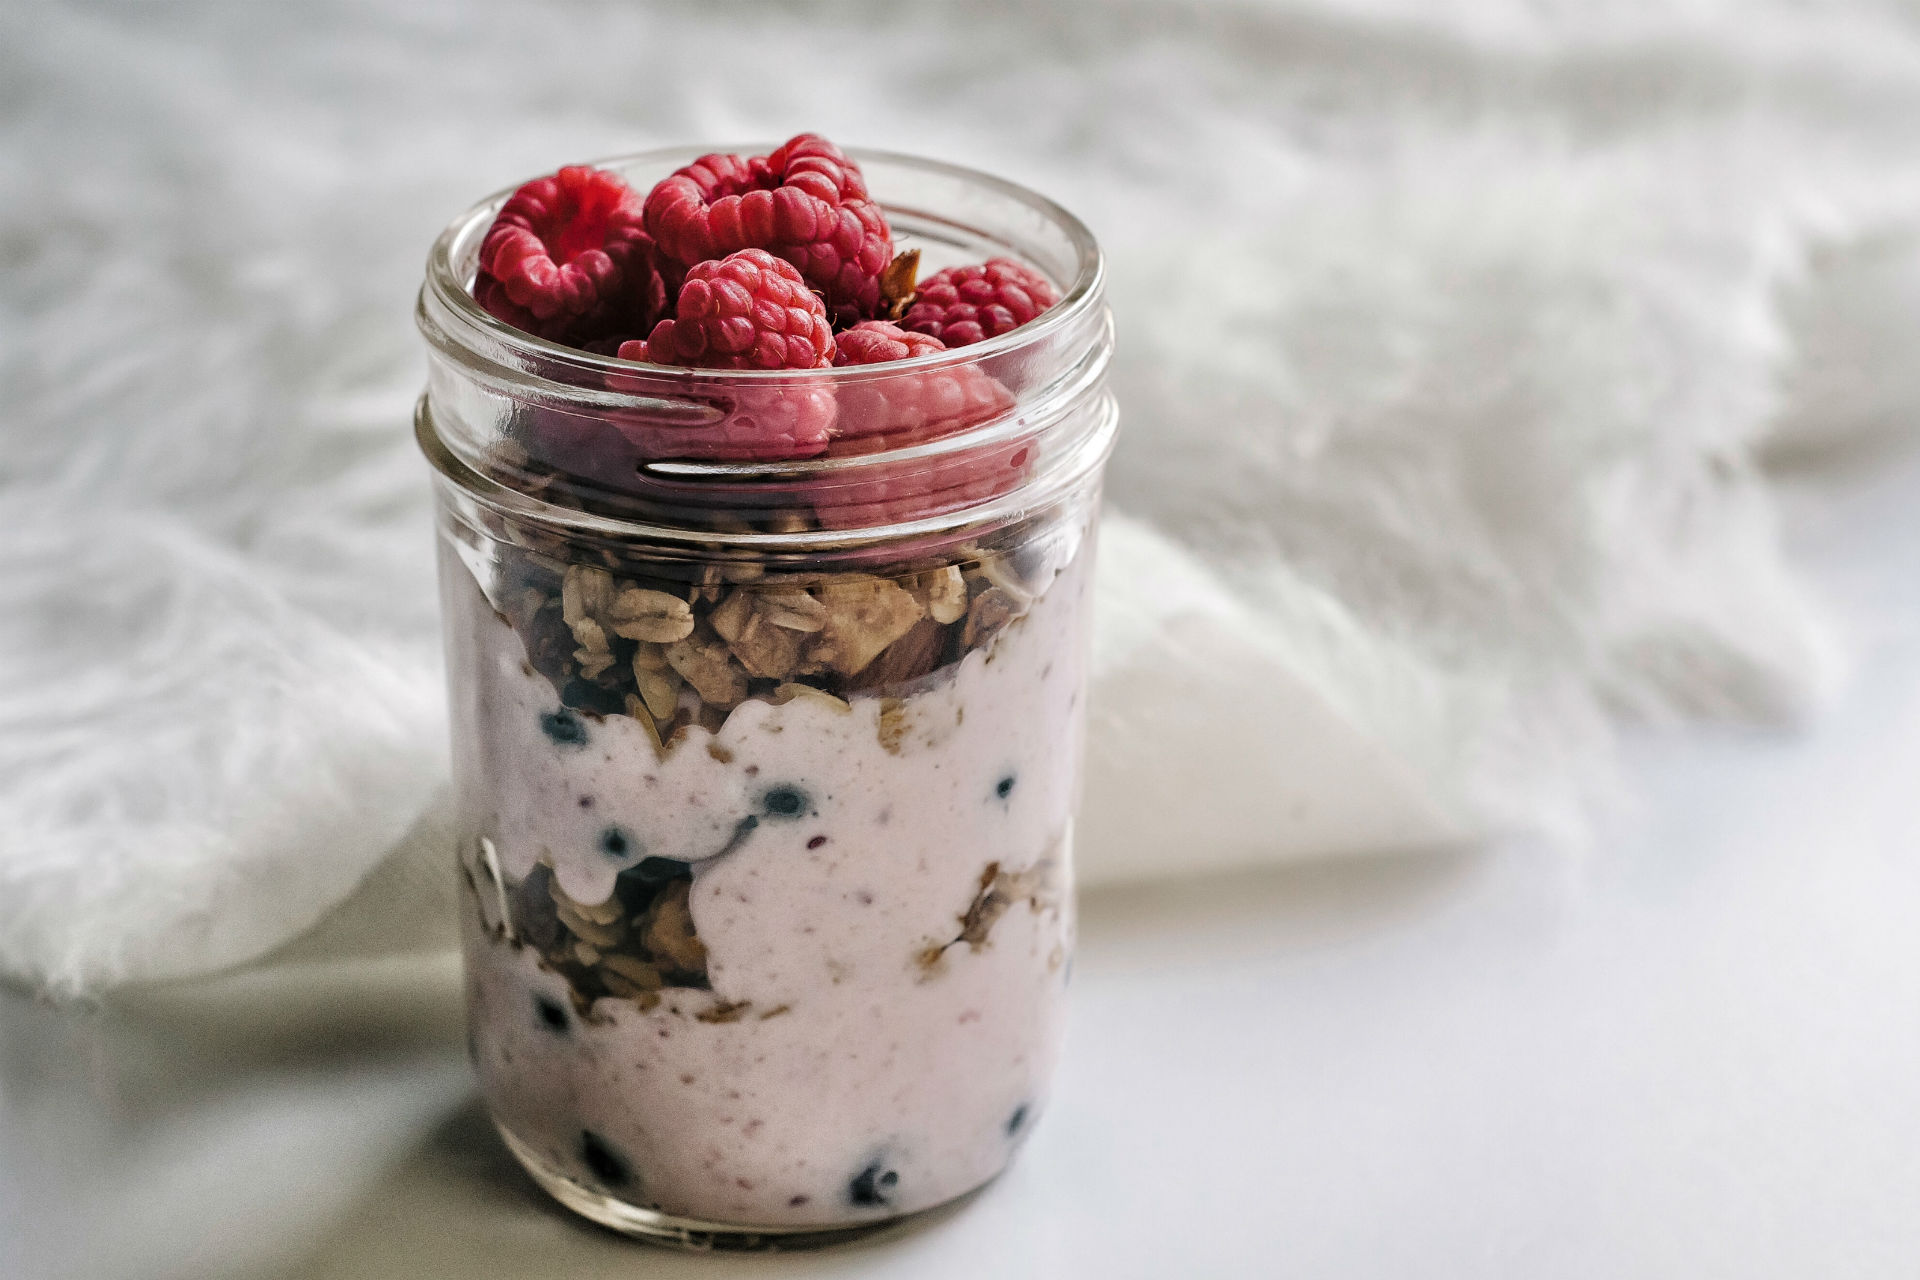 yogurt, berries and granola in a mason jar